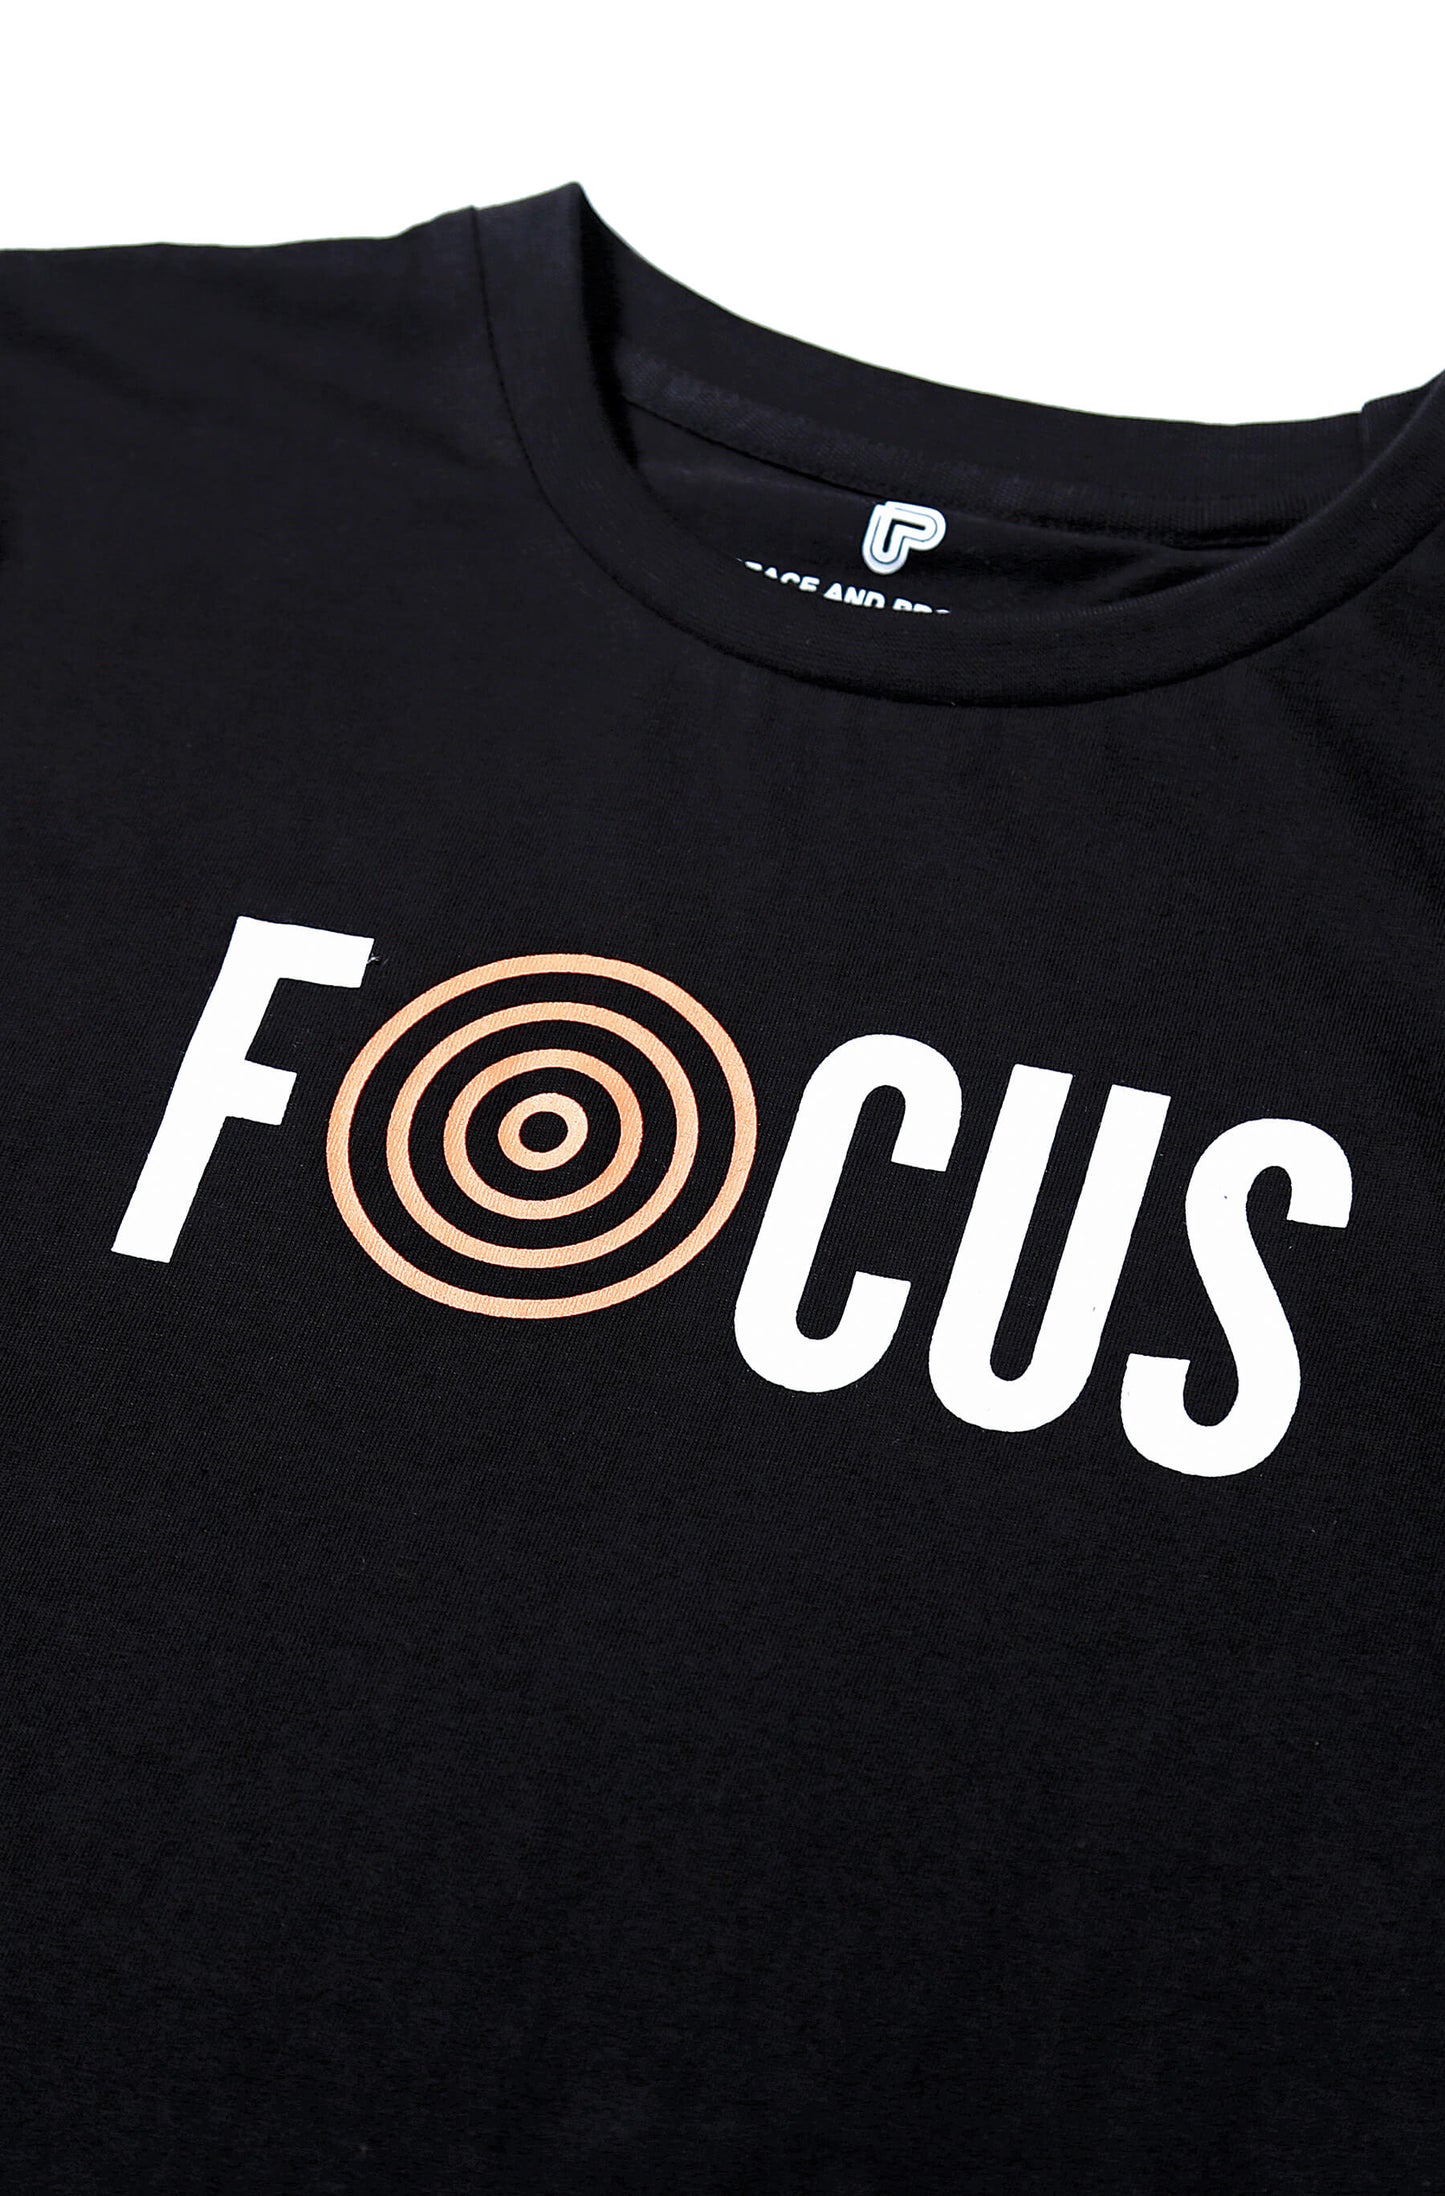 Focus 100% Combed Cotton Graphic T-shirt